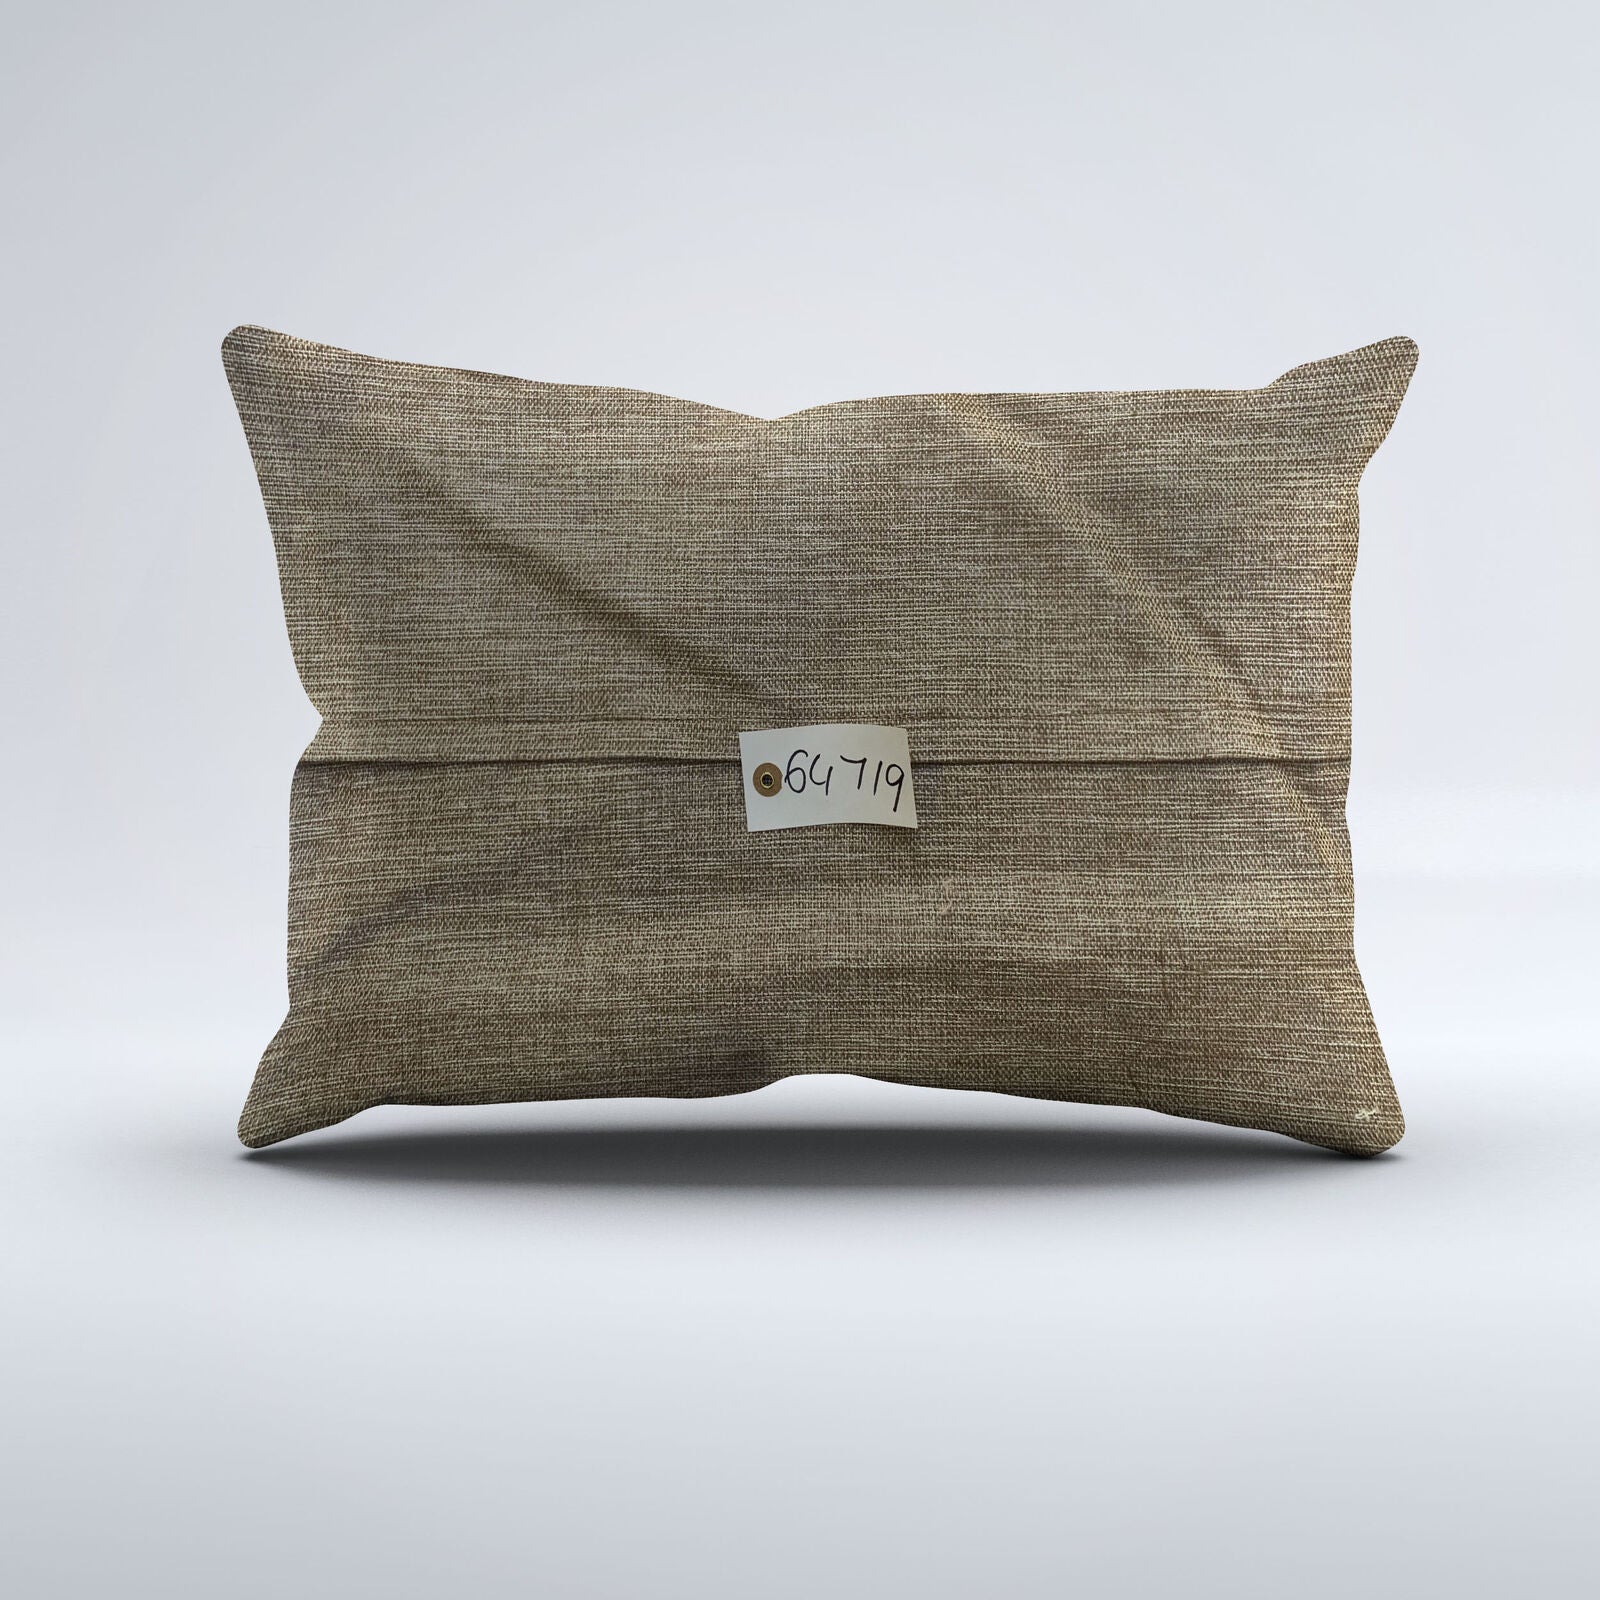 Vintage Turkish Kilim Cushion Cover 60x40 cm Square Wool Kelim Pillowcase 64719